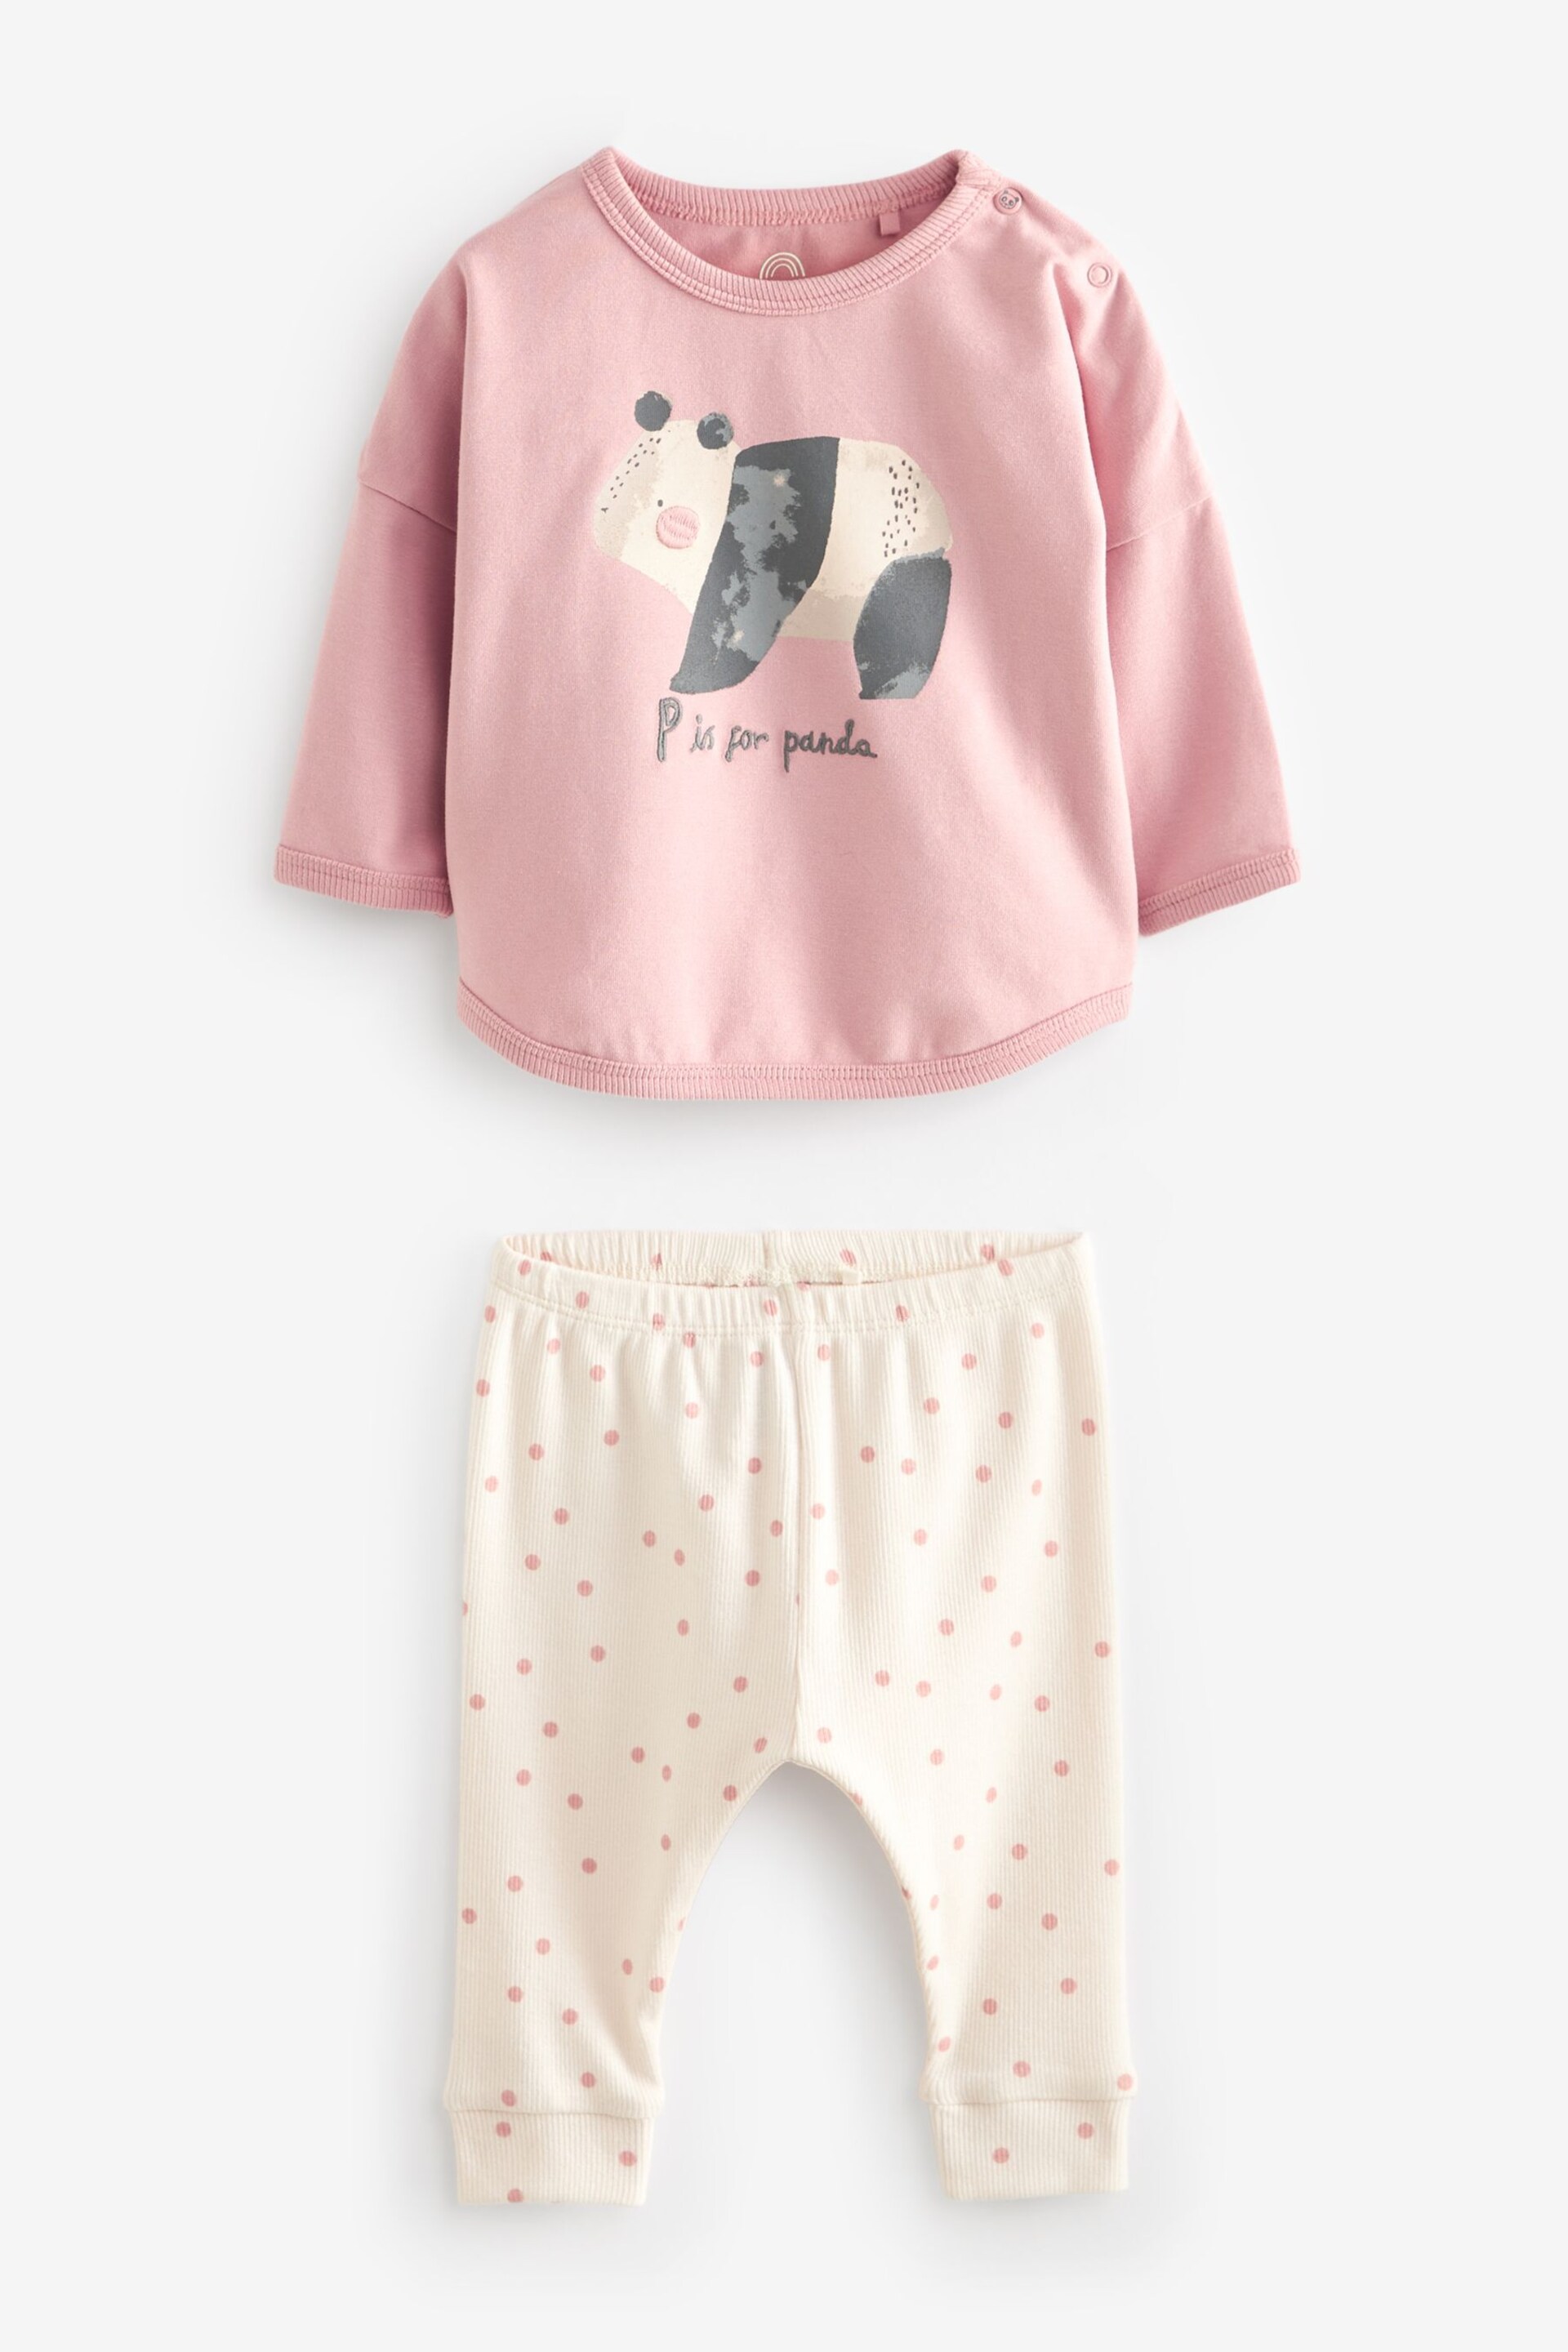 Pink Panda Baby Top And Leggings Set - Image 1 of 3